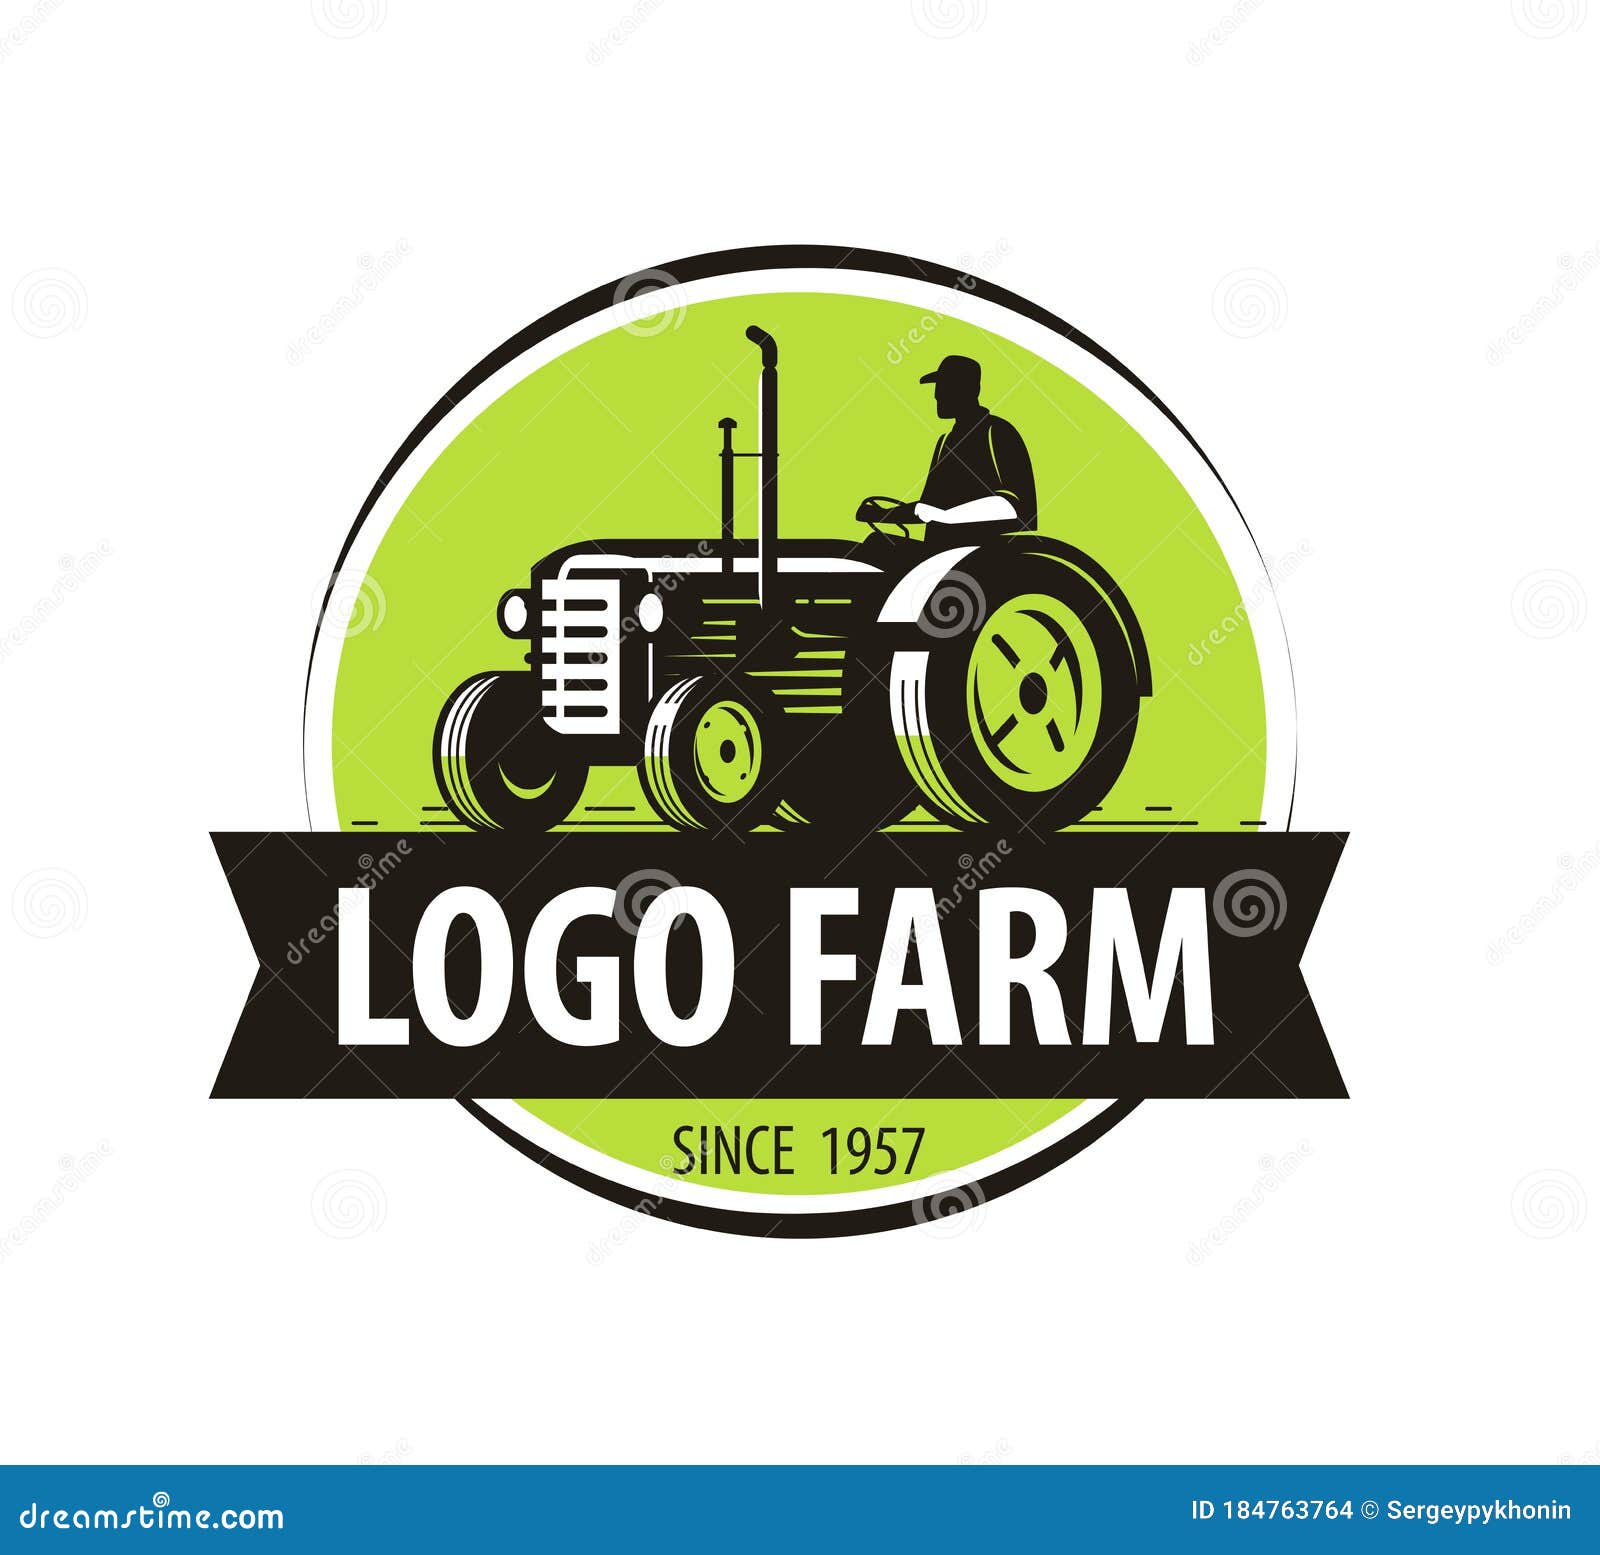 Farm Tractor Logo. Agriculture, Farming Vector Illustration Stock ...